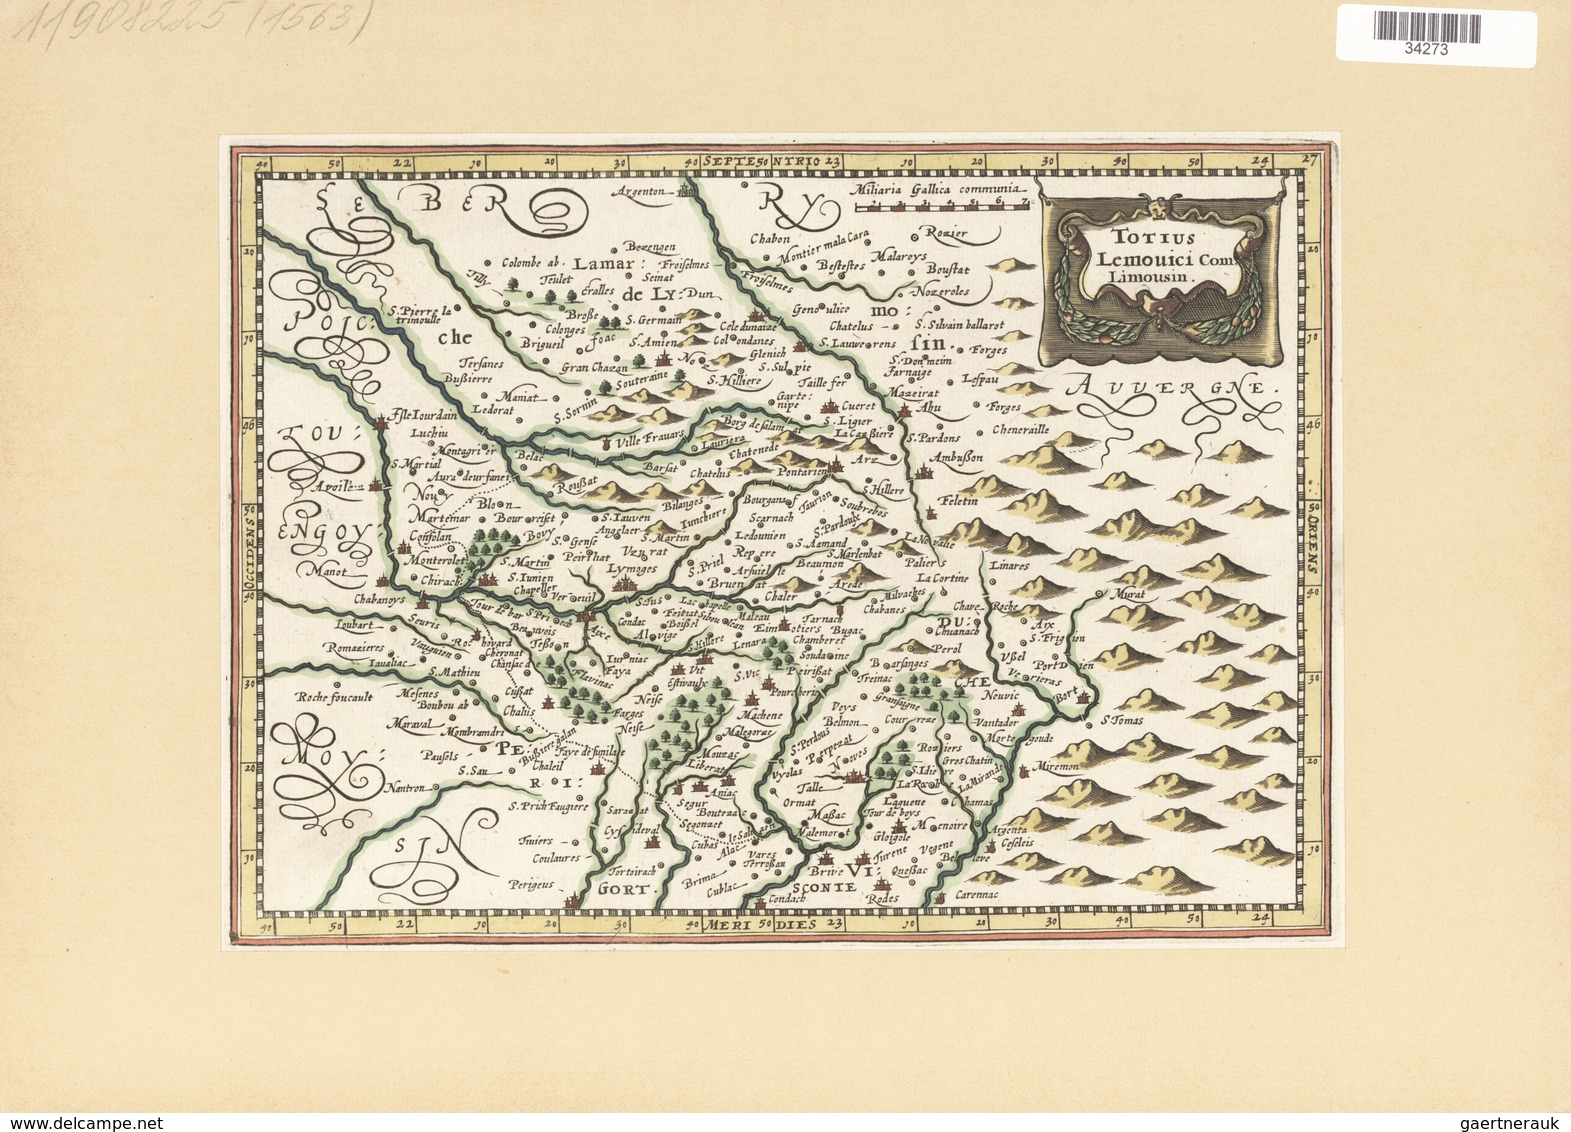 Landkarten Und Stiche: 1734. Totius Lemouici Com Limousin From The Mercator Atlas Minor Ca 1648, Lat - Geography